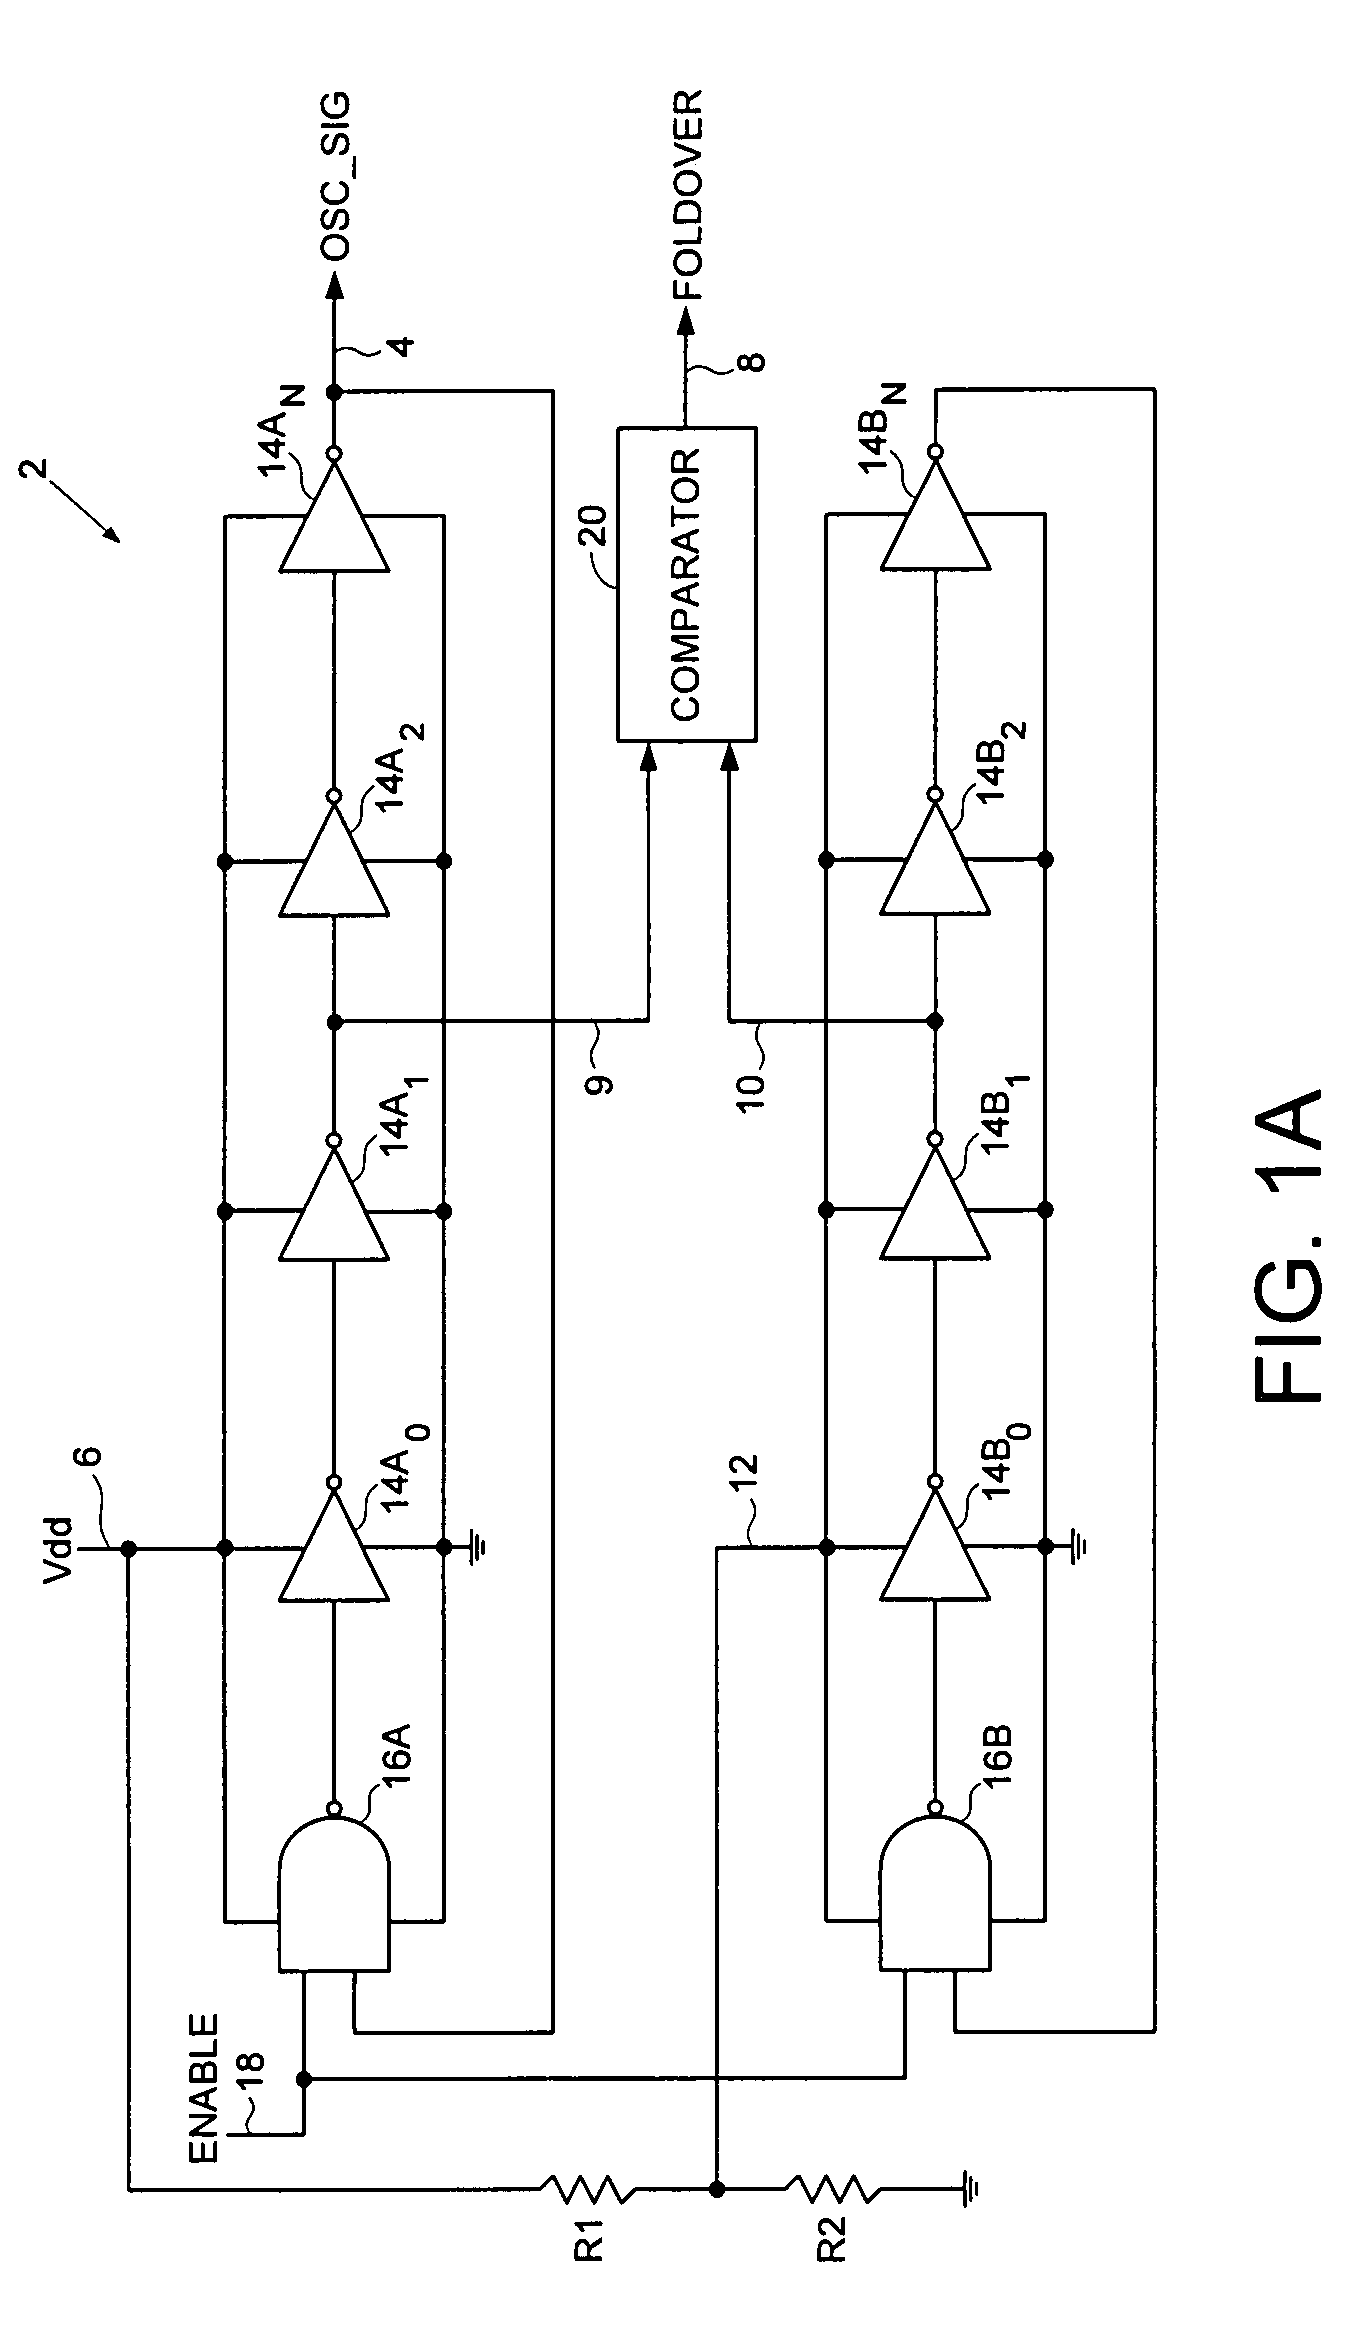 Oscillator comprising foldover detection